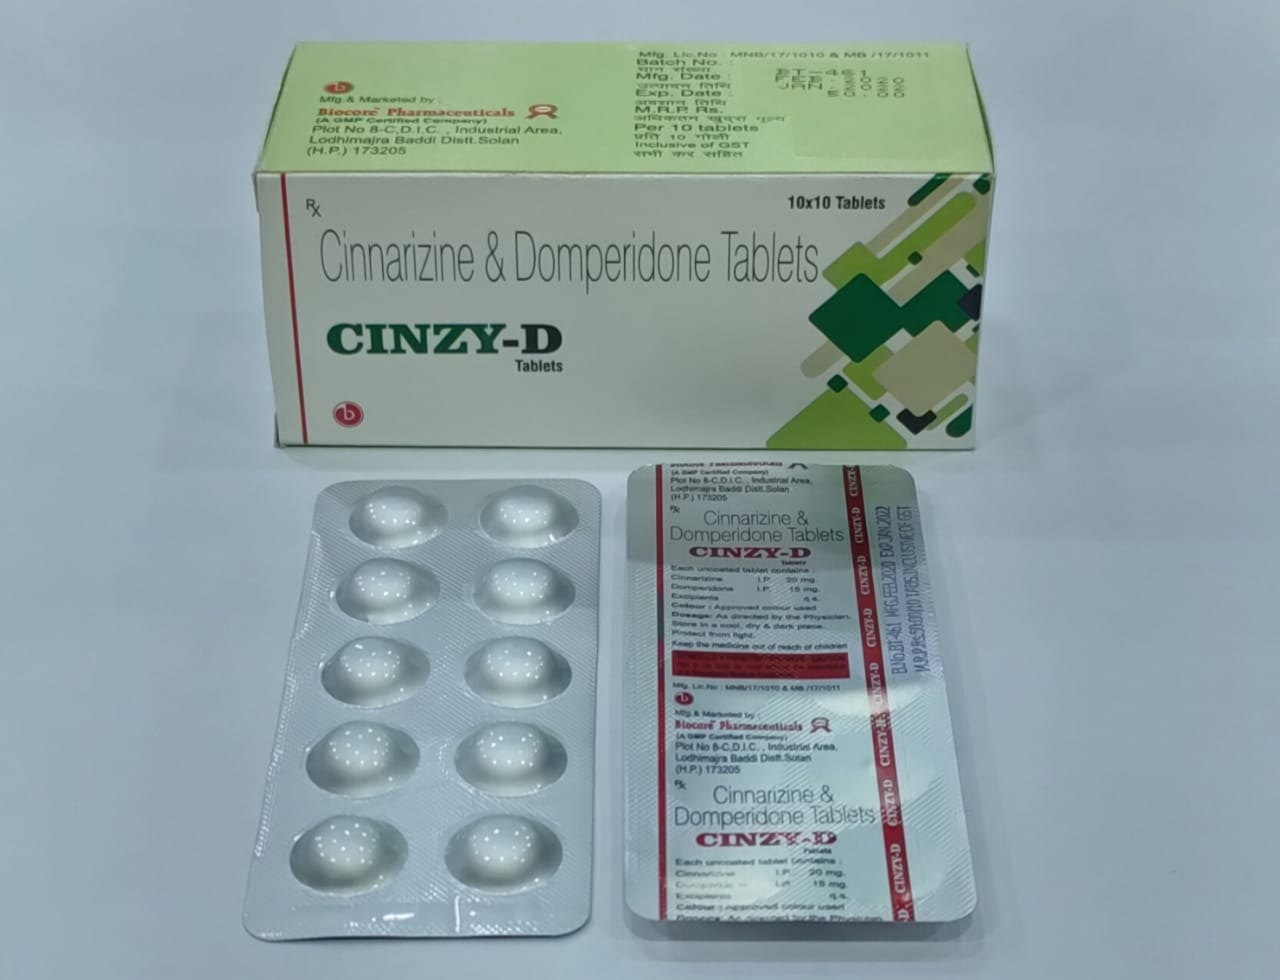 CINZY-D Tablets